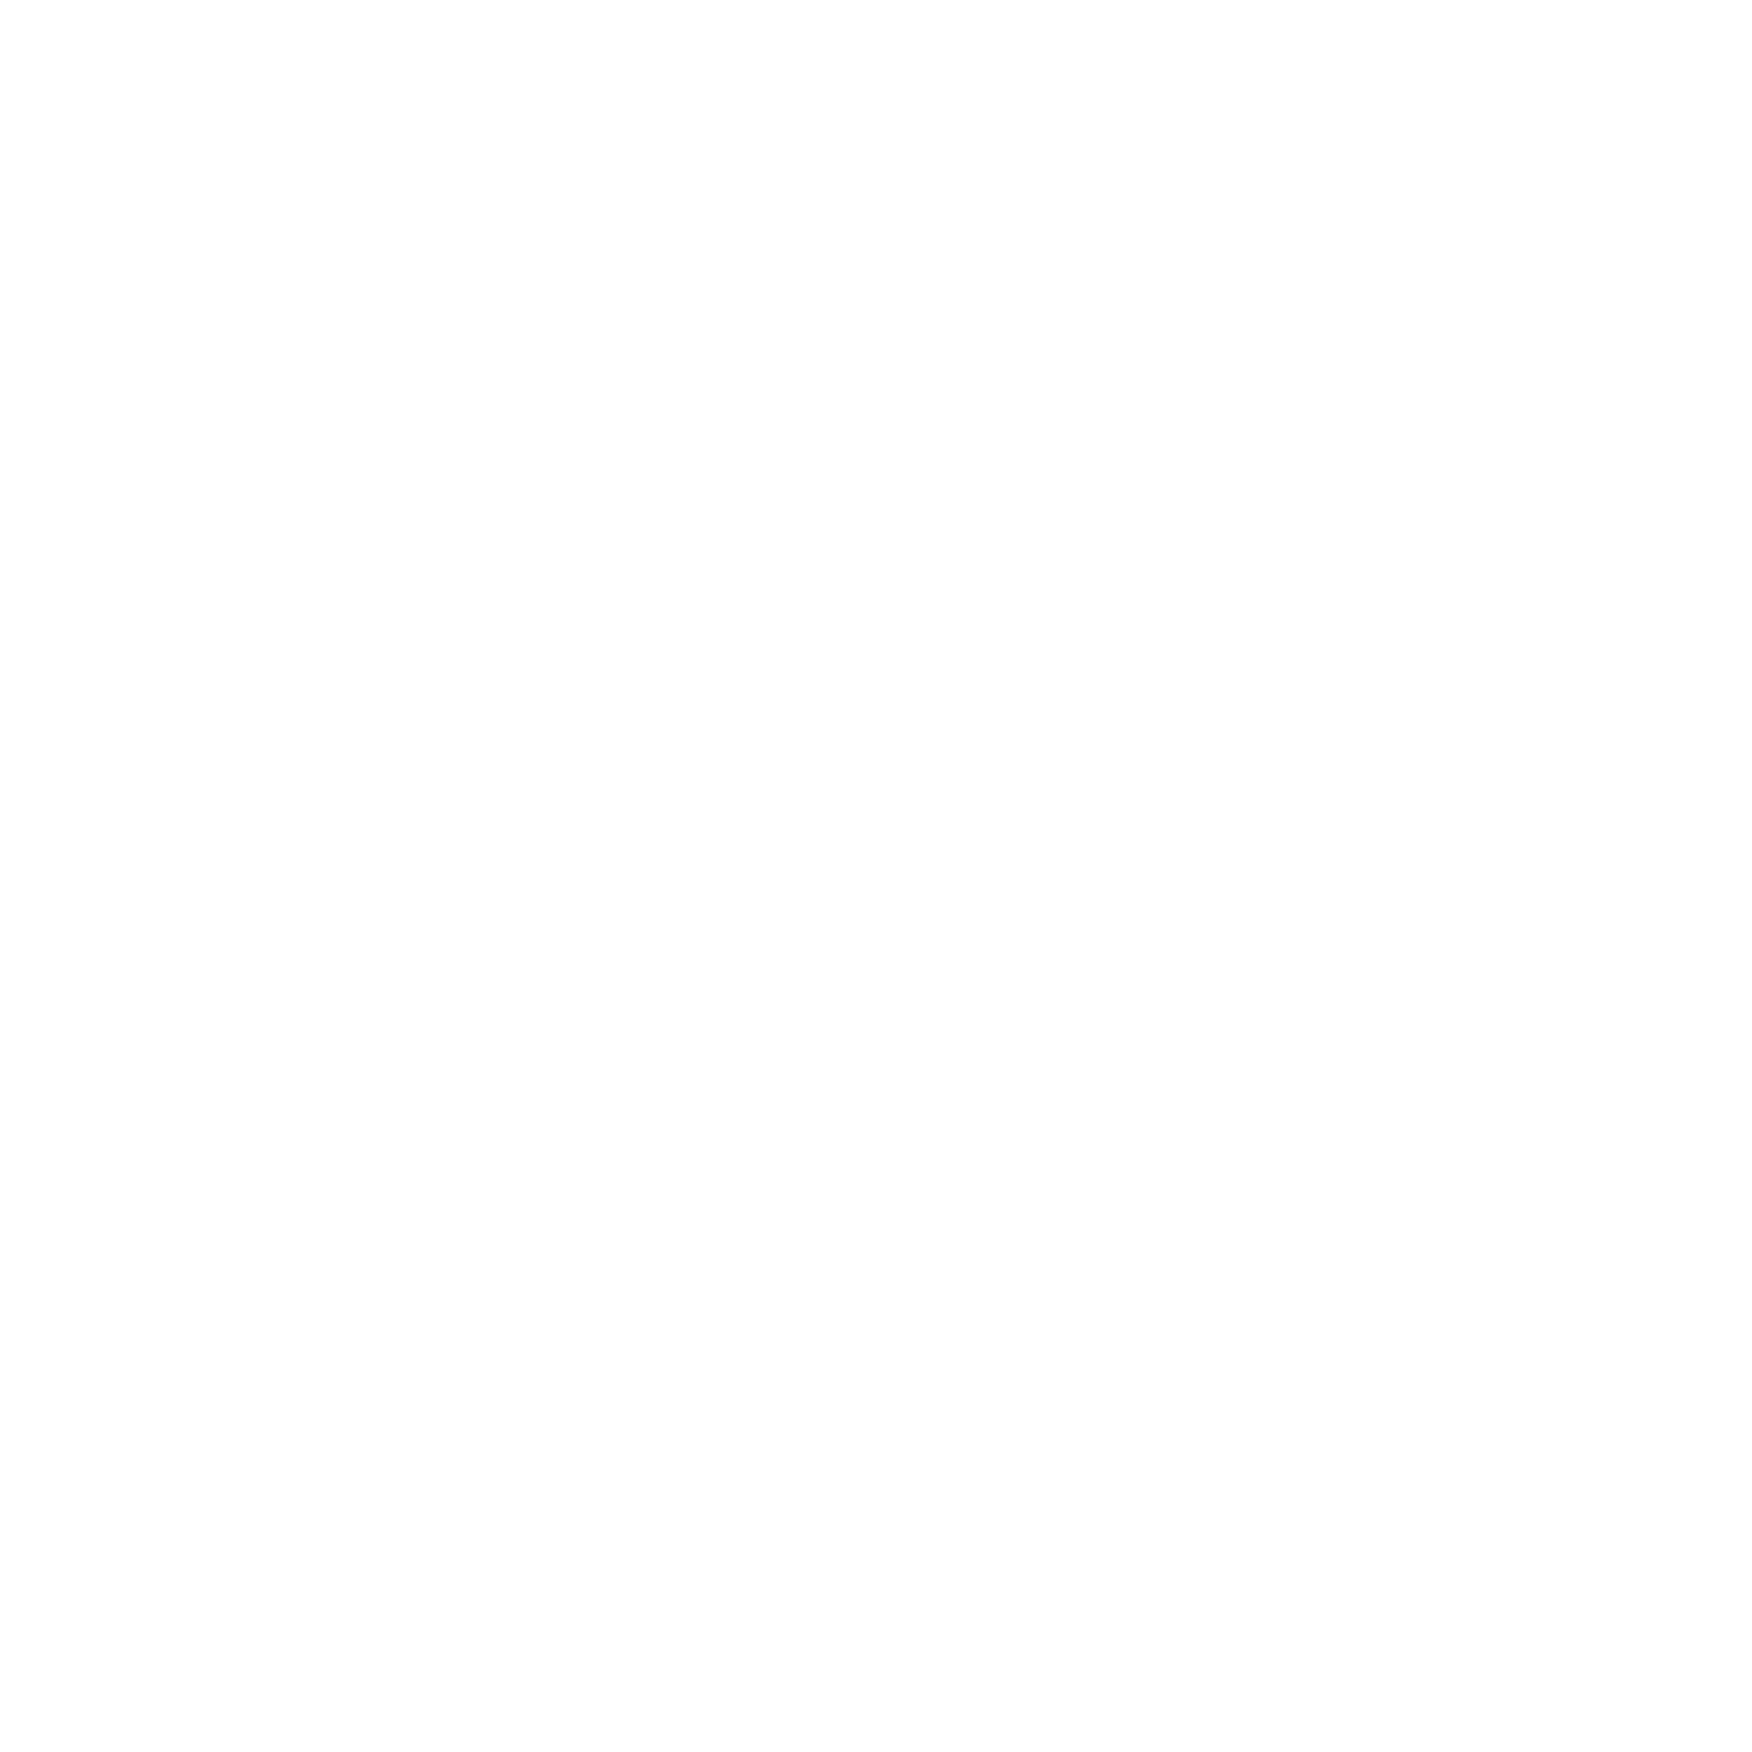 Avatar pattern